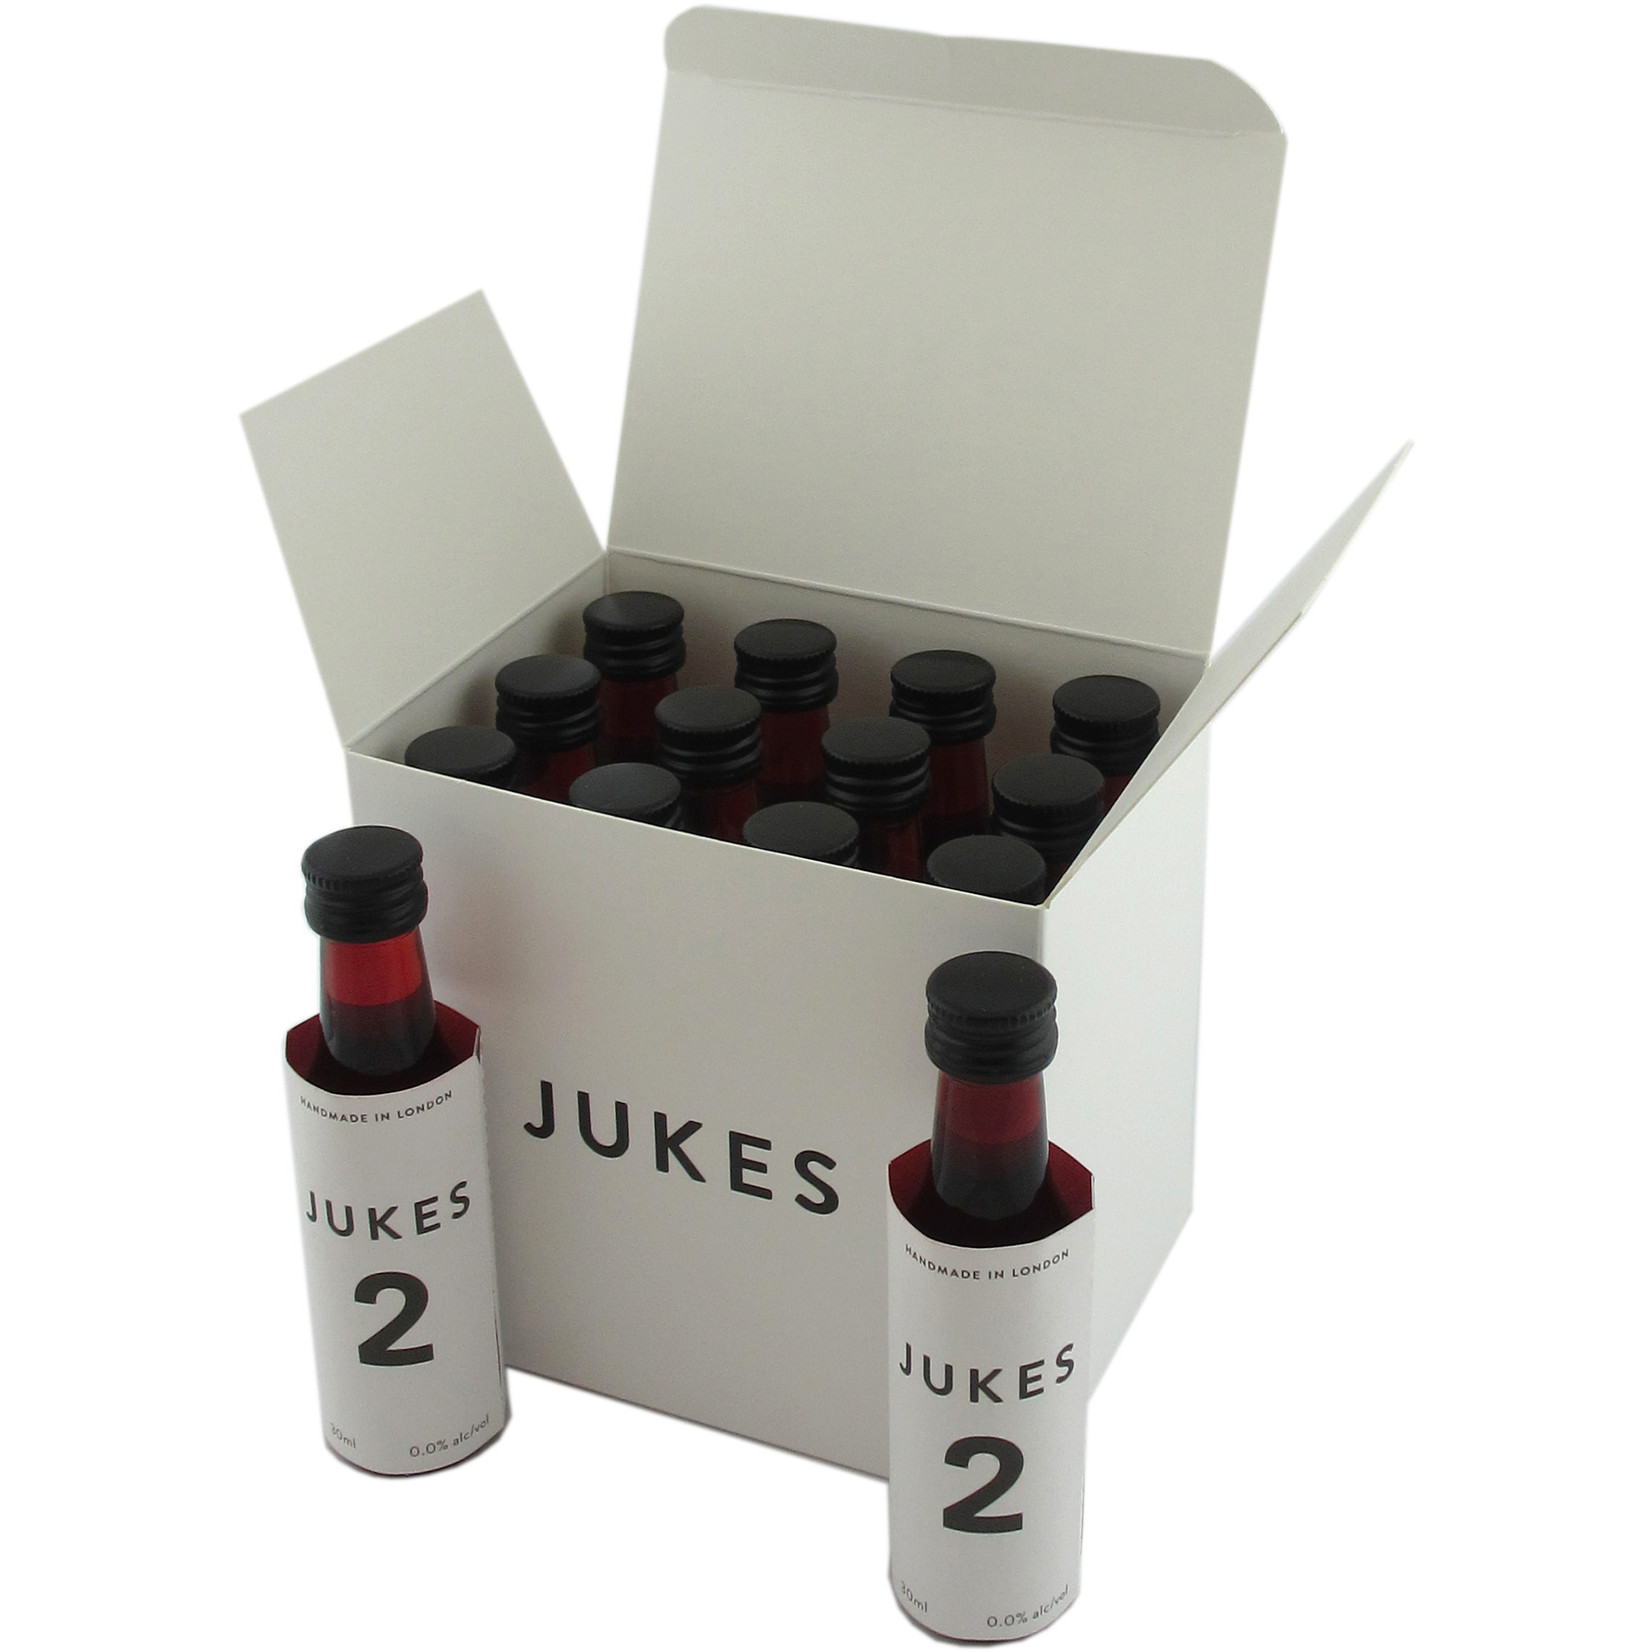 Jukes Cordialities Jukes 2 box for restaurants & bars